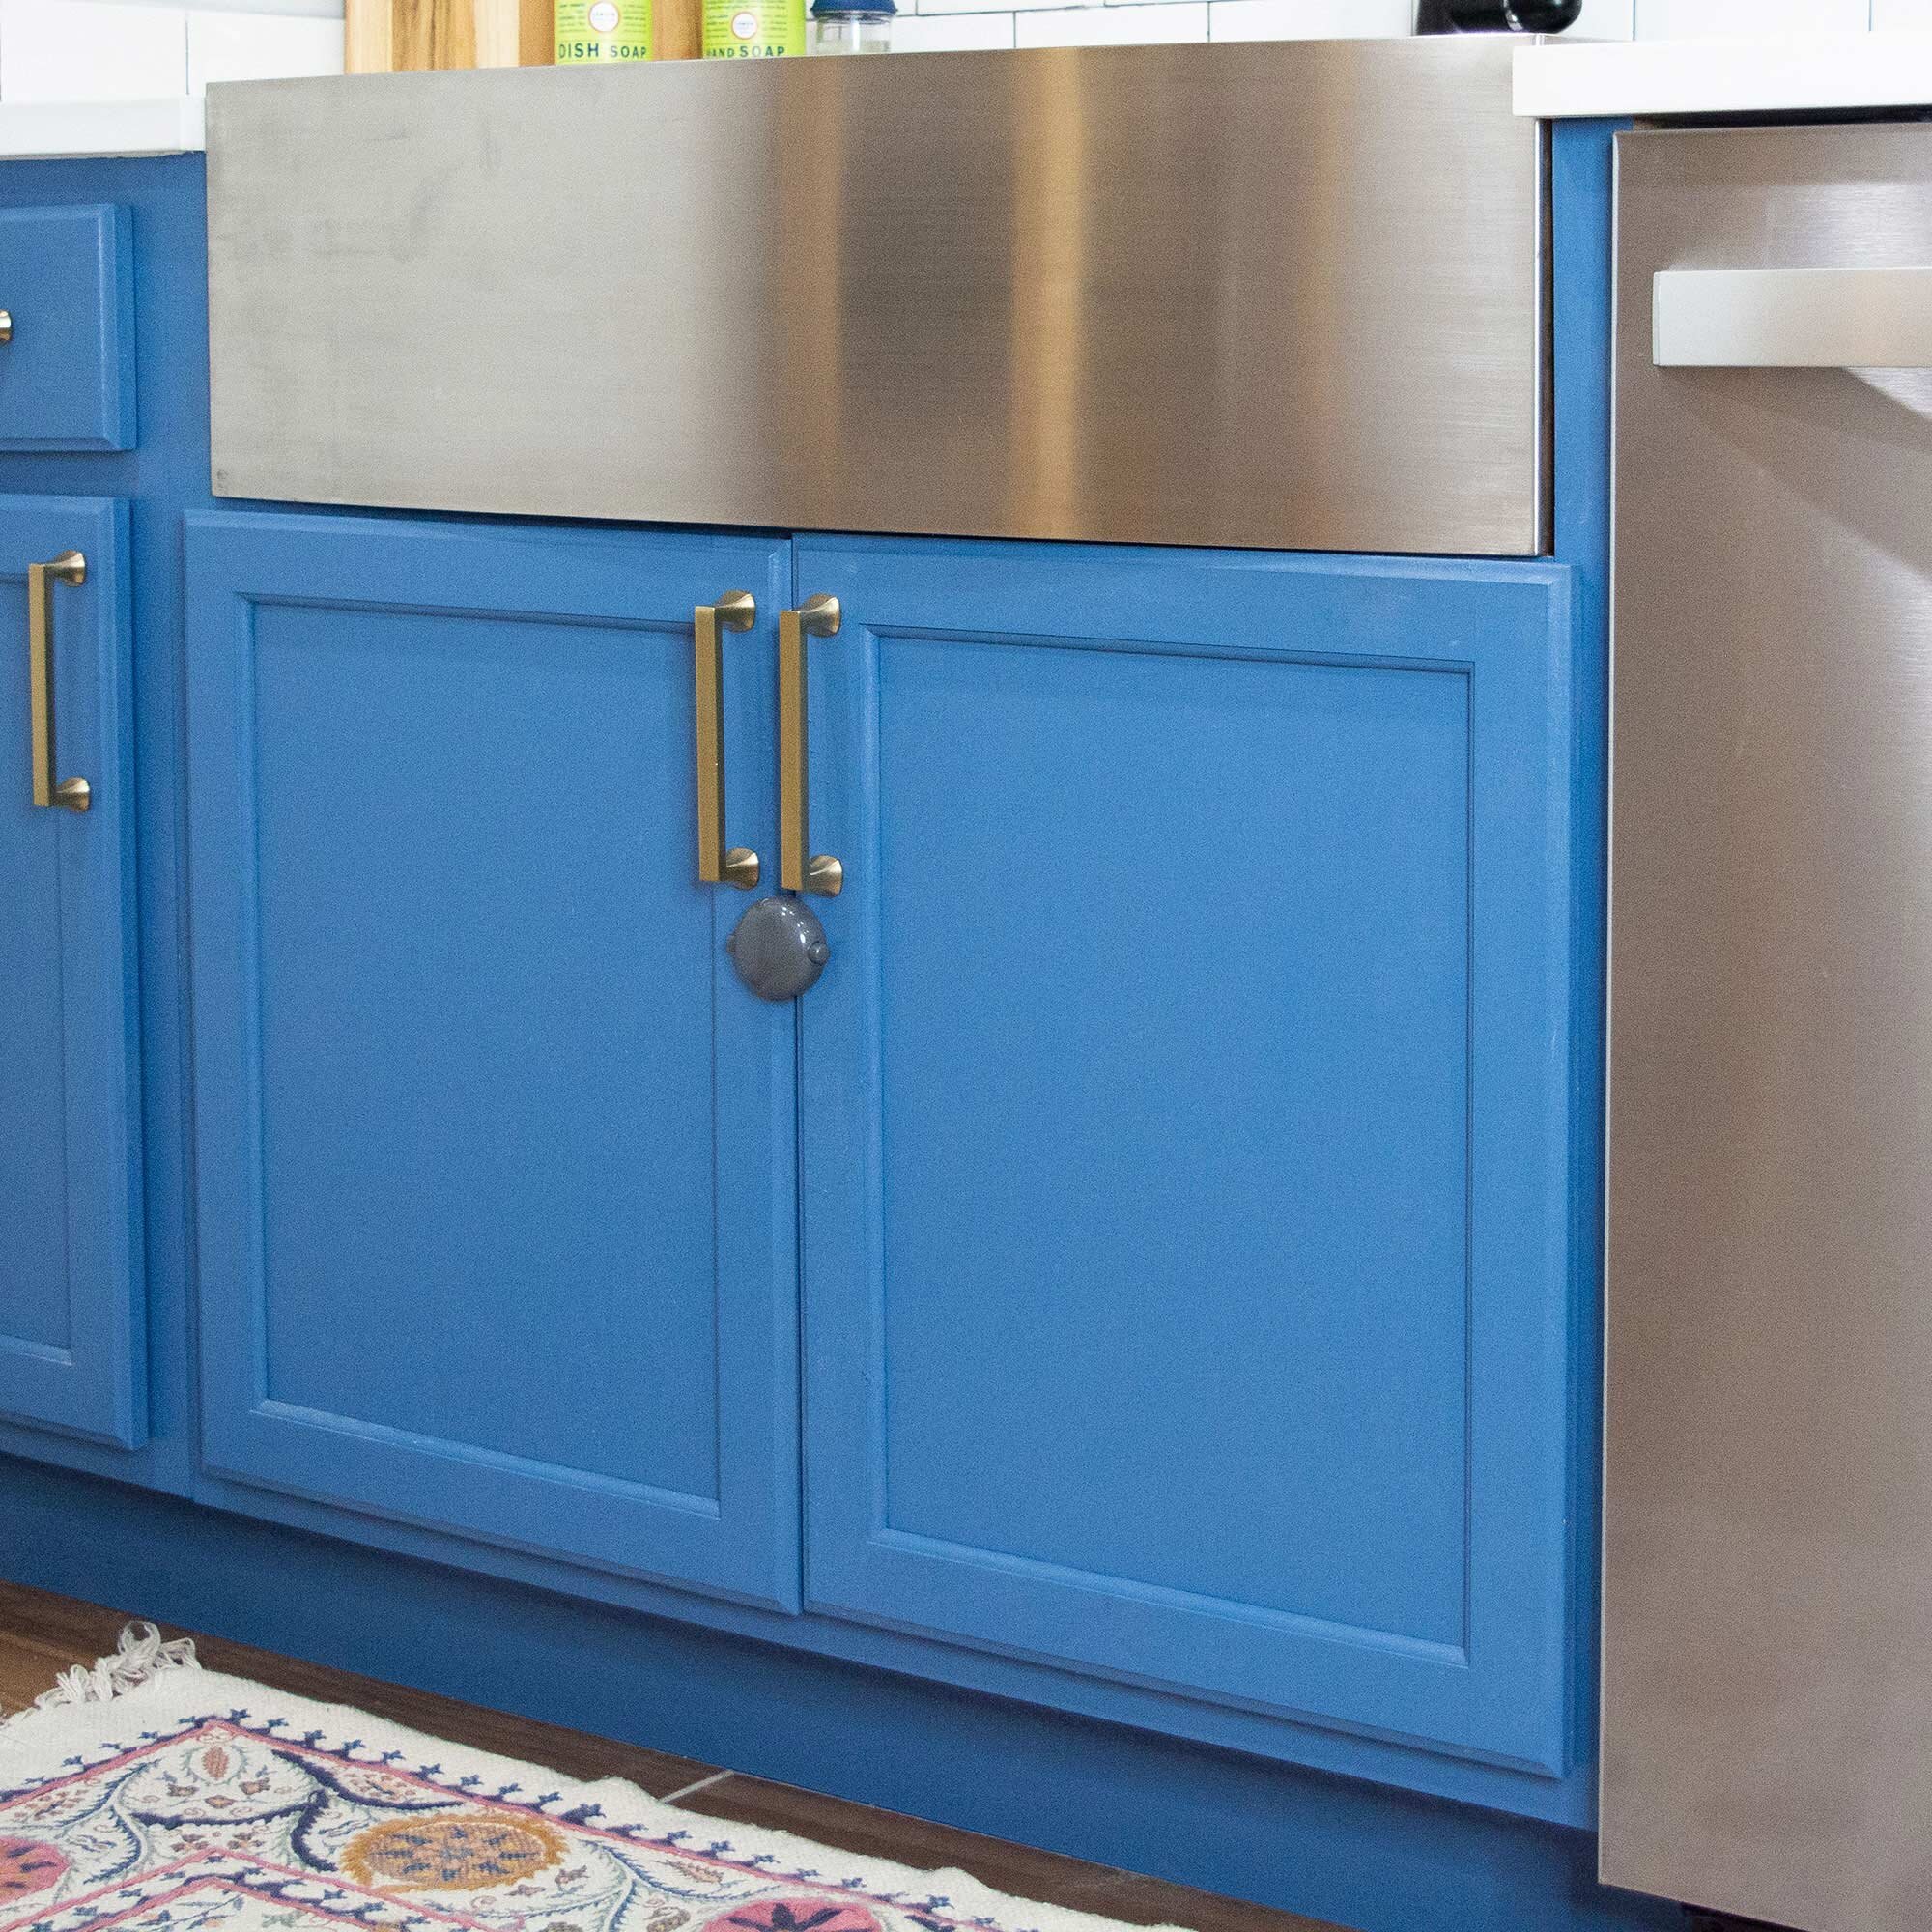 Adhesive Double Door Lock on blue cabinet